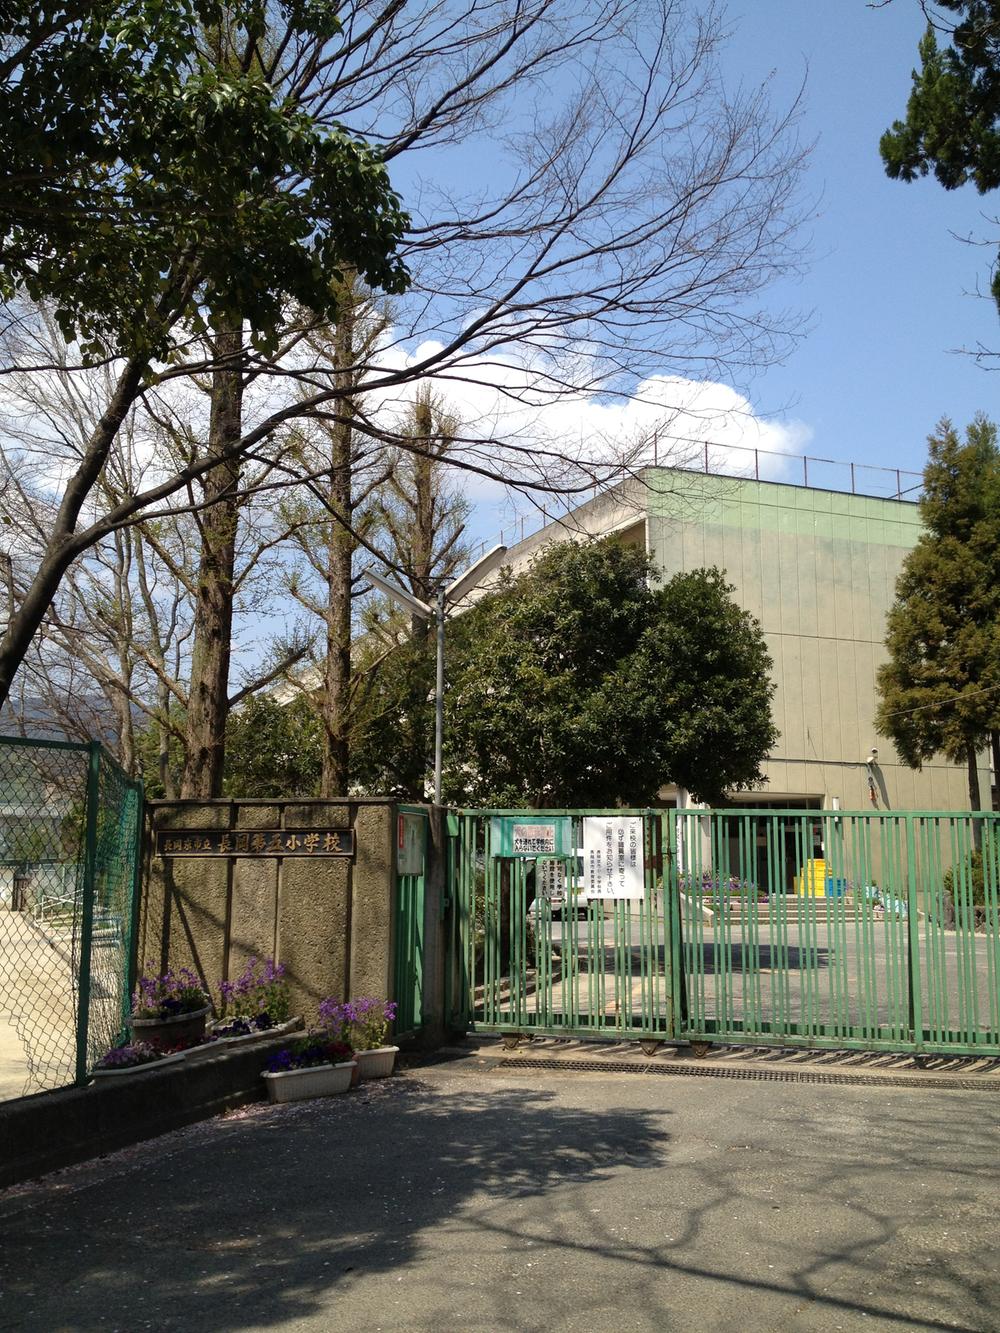 Primary school. Nagaokakyo 880m to stand Nagaoka fifth elementary school